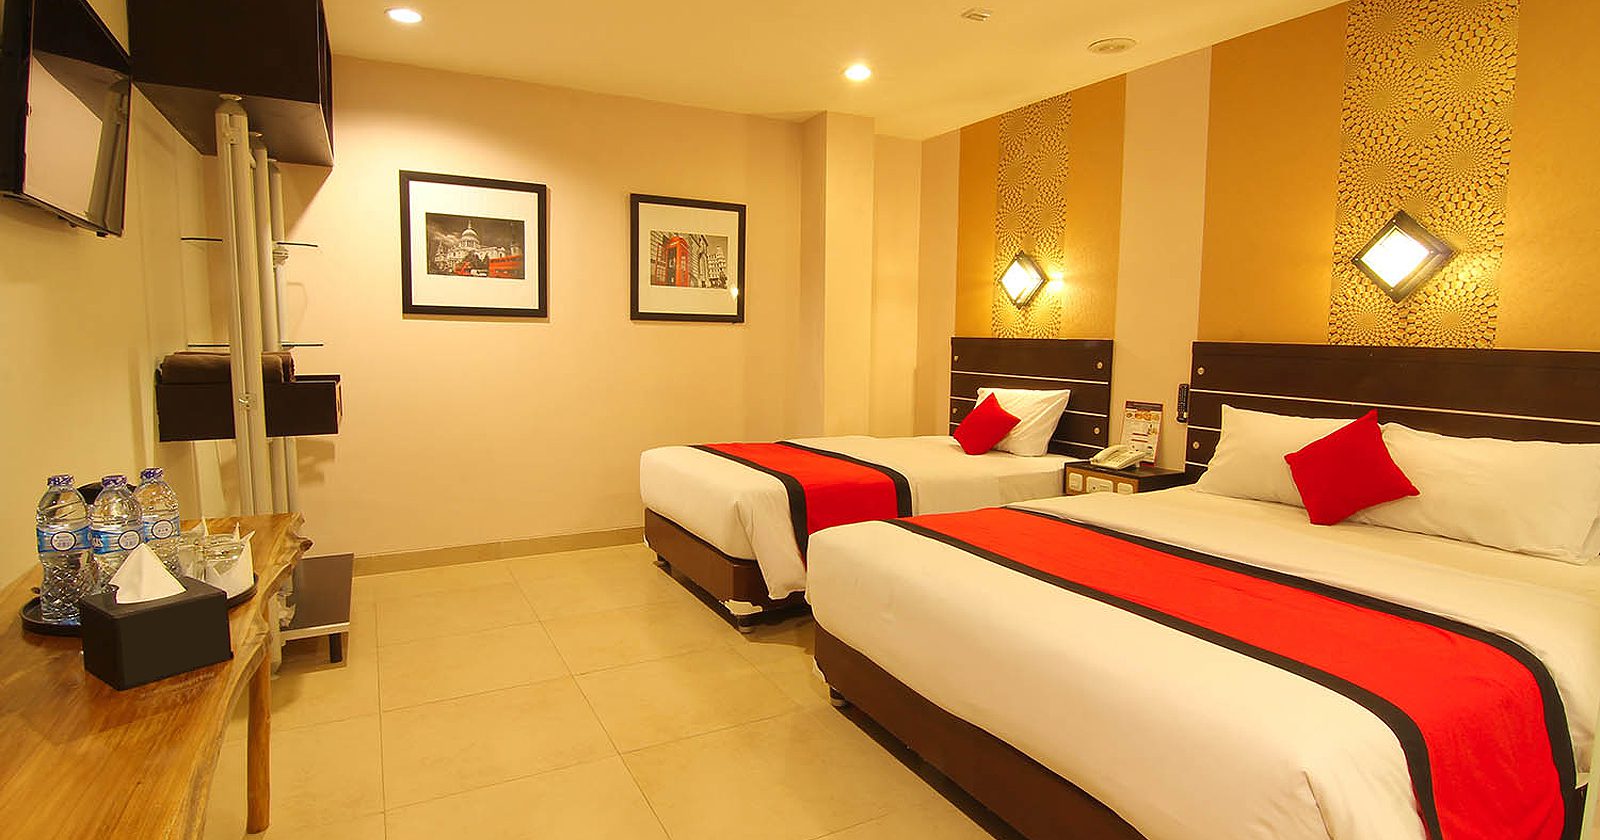 10 Rekomendasi Hotel Murah Jakarta Barat, Mau Stay di Mana? - Blibli Friends